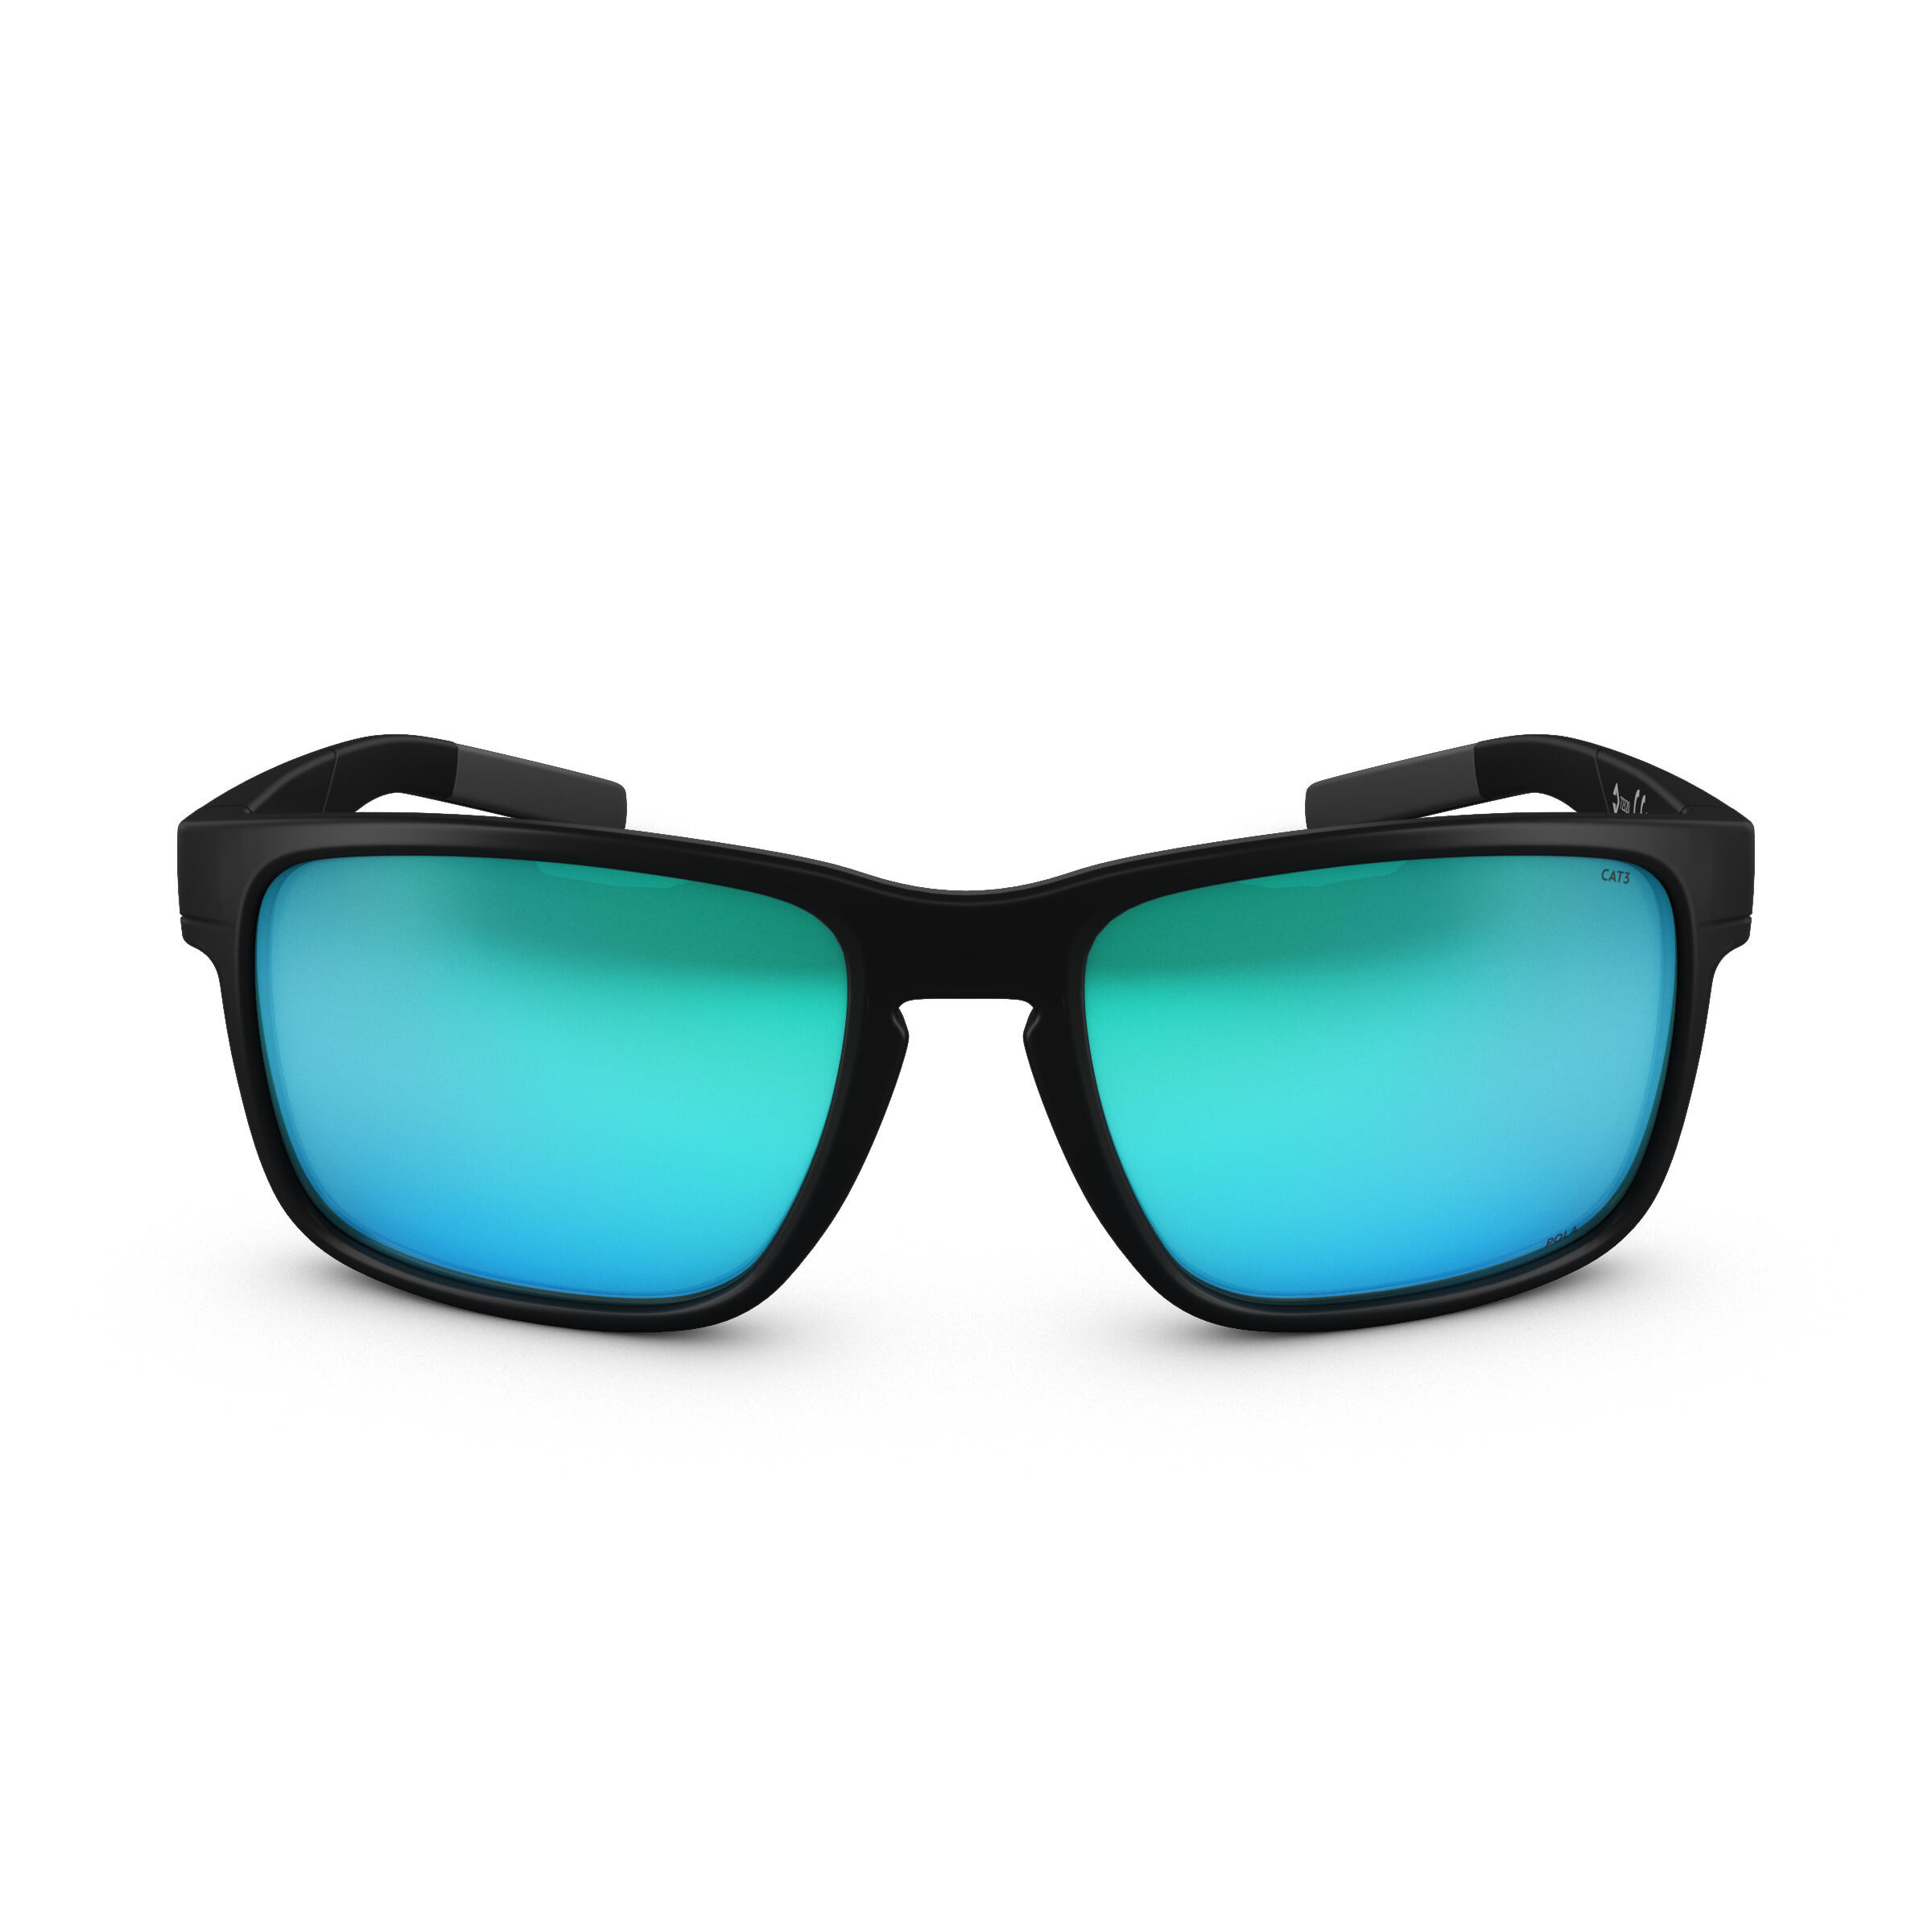 MH530 polarizing hiking sunglasses - Adults - black, Dark grey ...